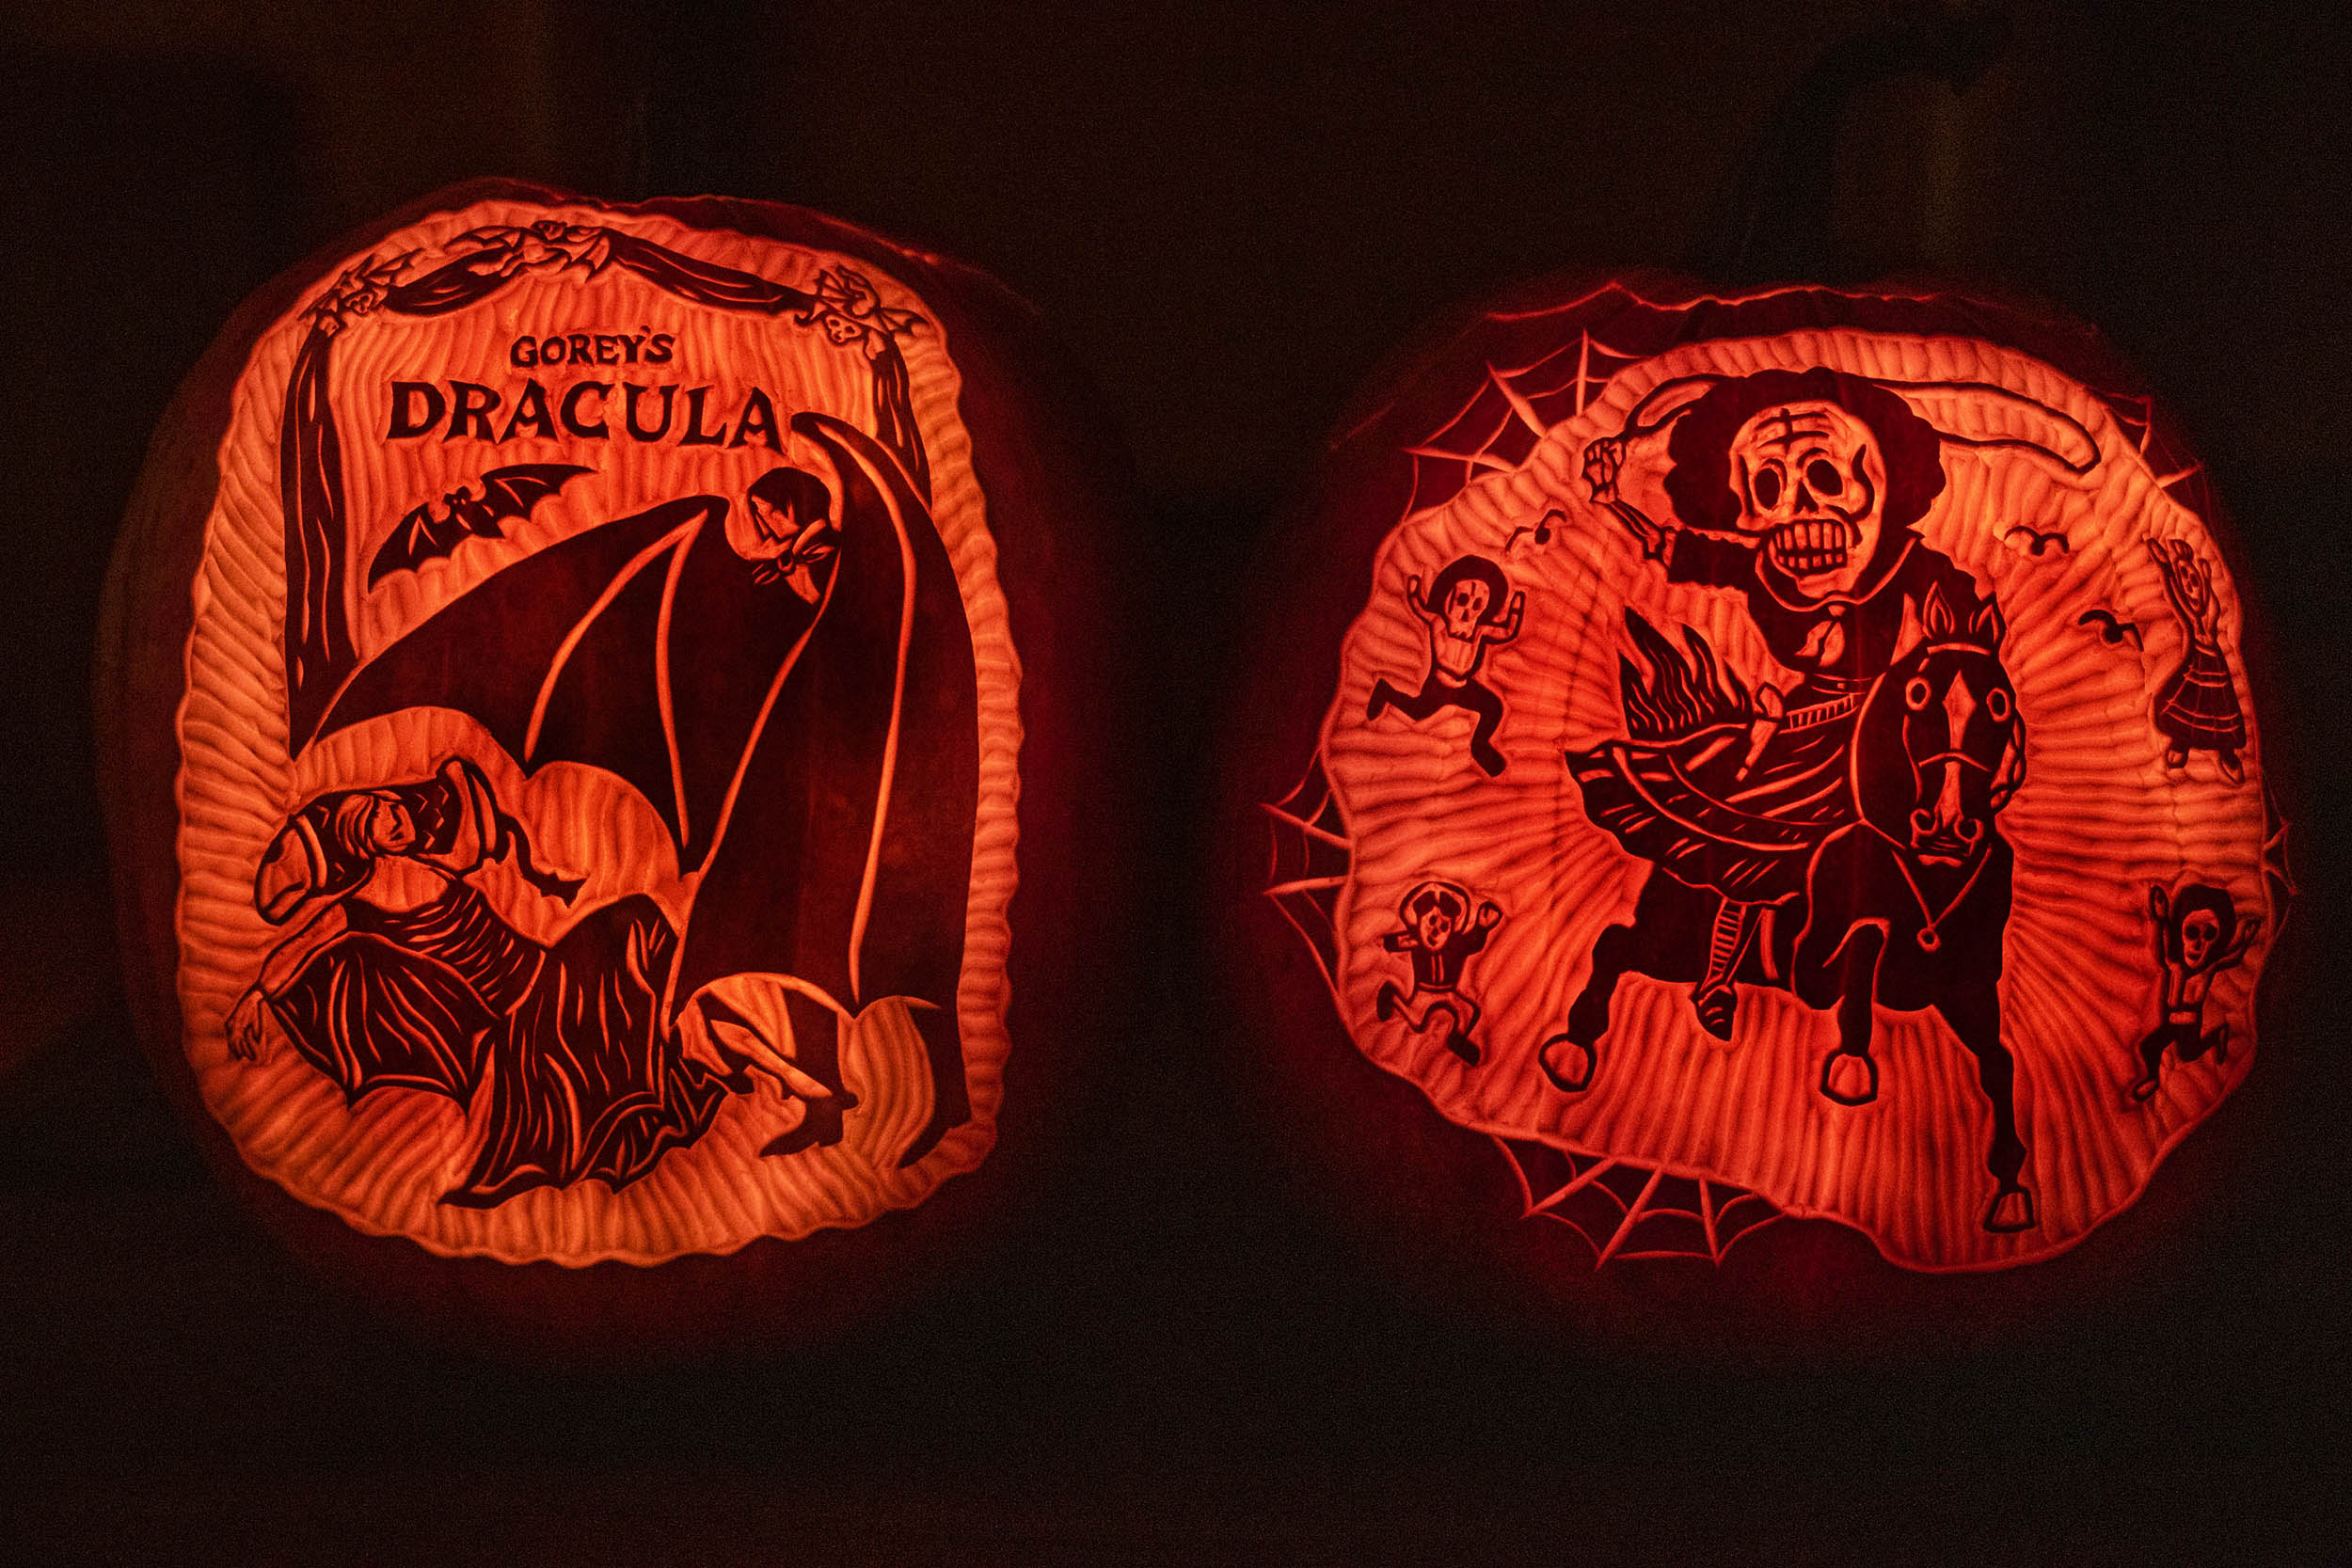 Left pumpkin: Dracula getting ready to bite a woman Right pumpkin: headless horseman riding a horse